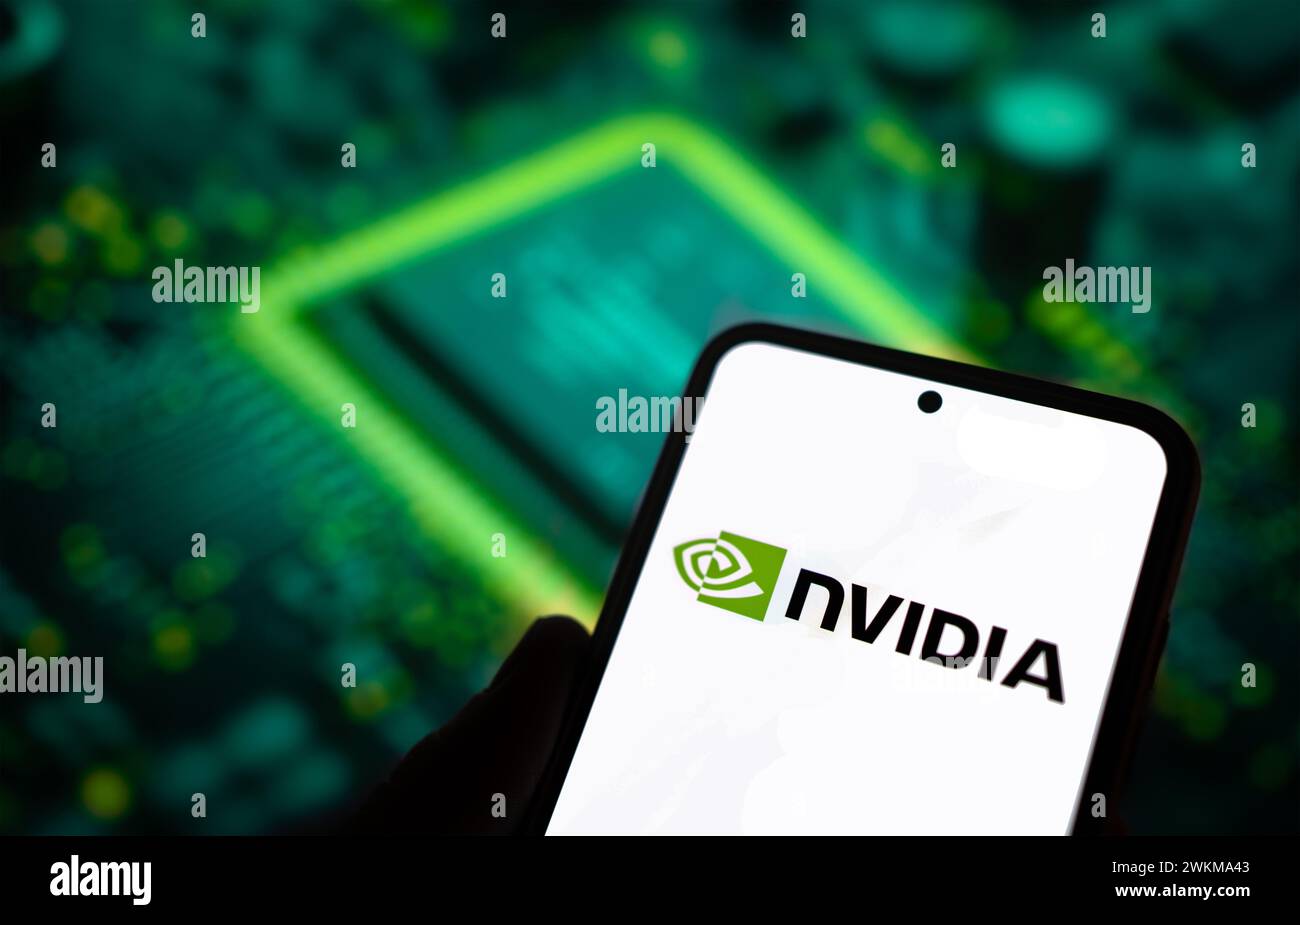 NVIDIA Technologieunternehmen auf Mobiltelefon angezeigt Stockfoto